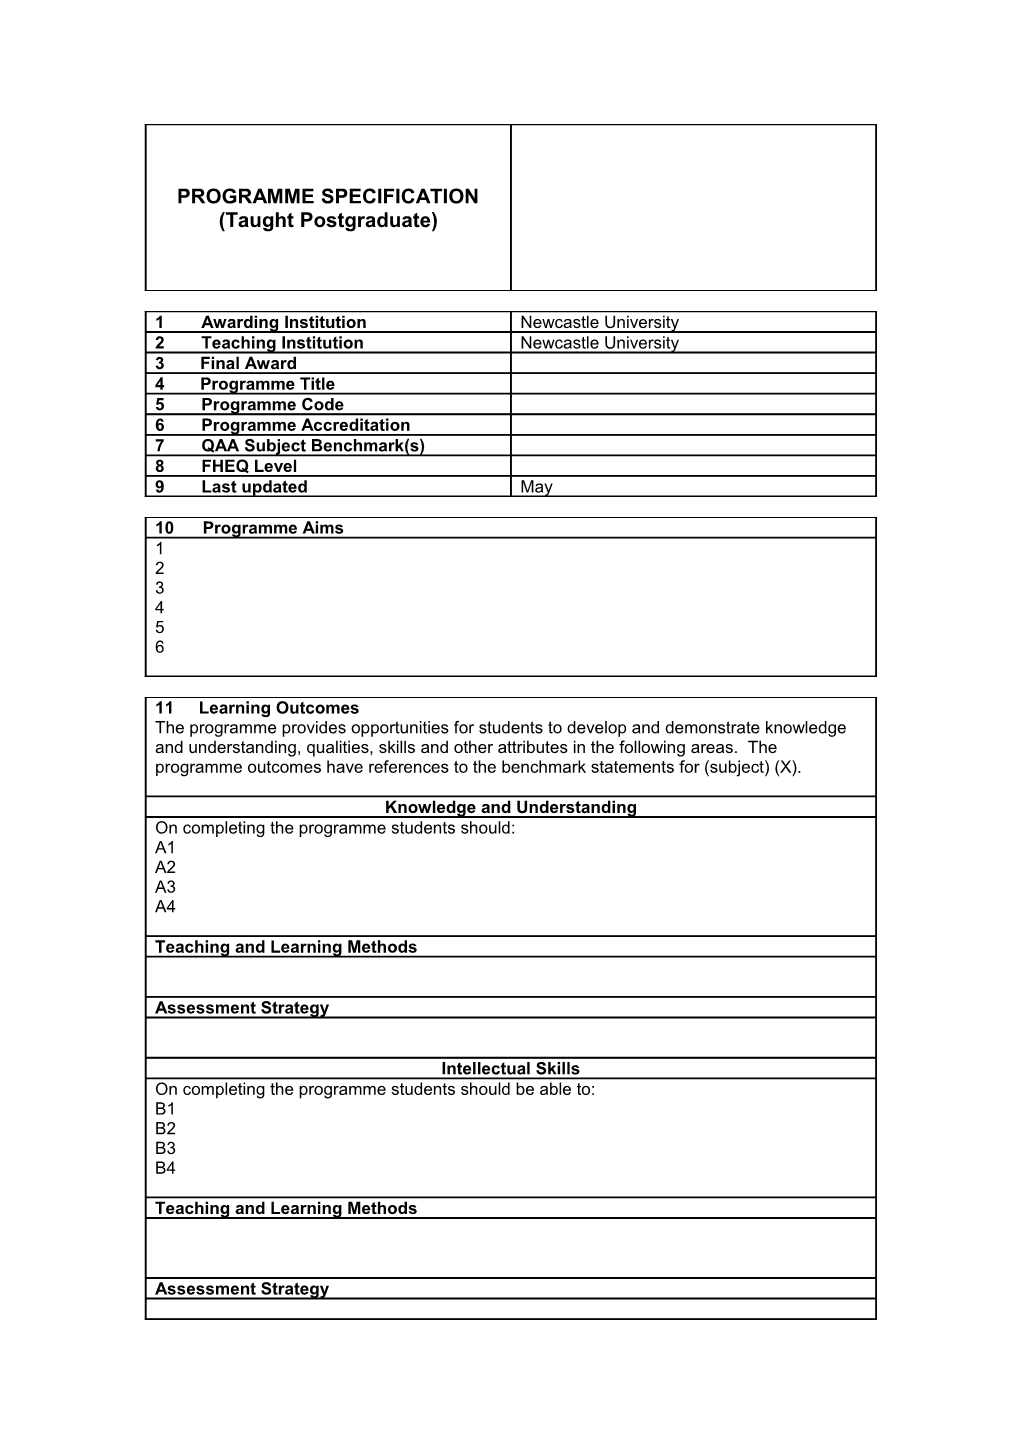 Newcastle University Programme Specification